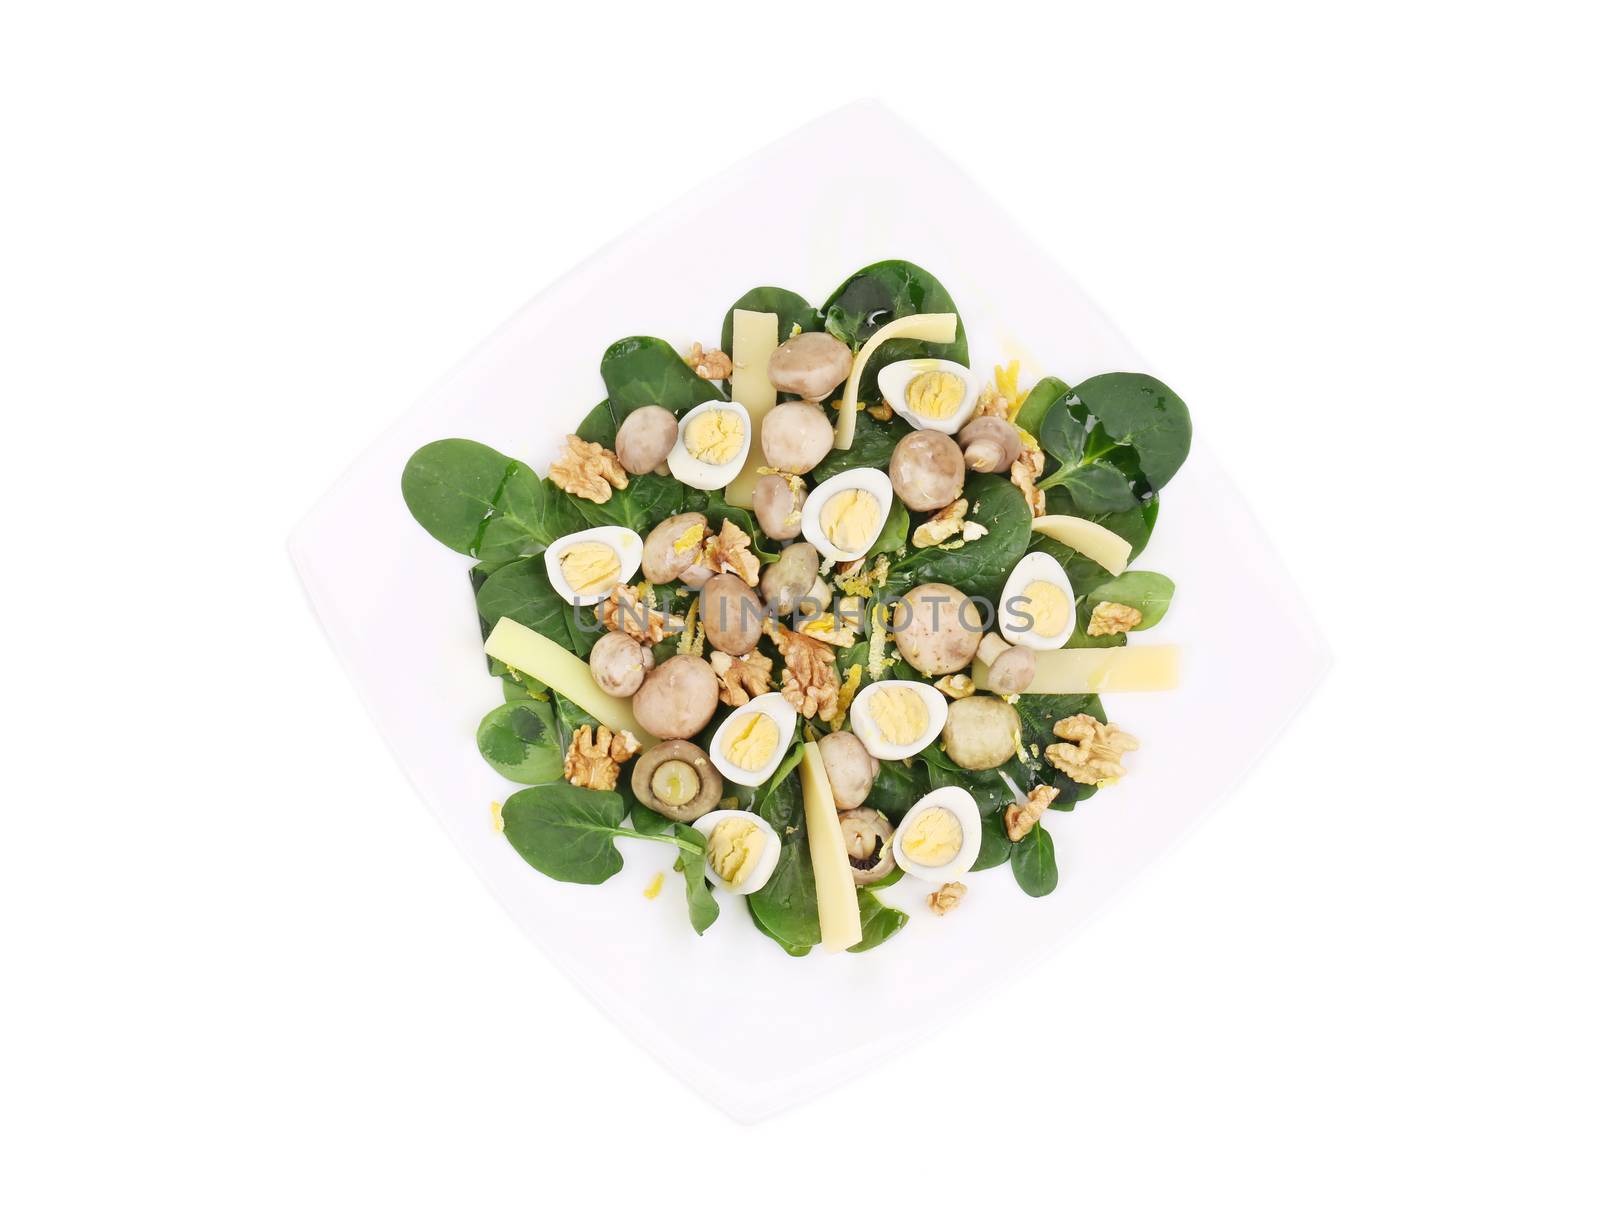 Mushroom salad with walnuts and parmesan. by indigolotos